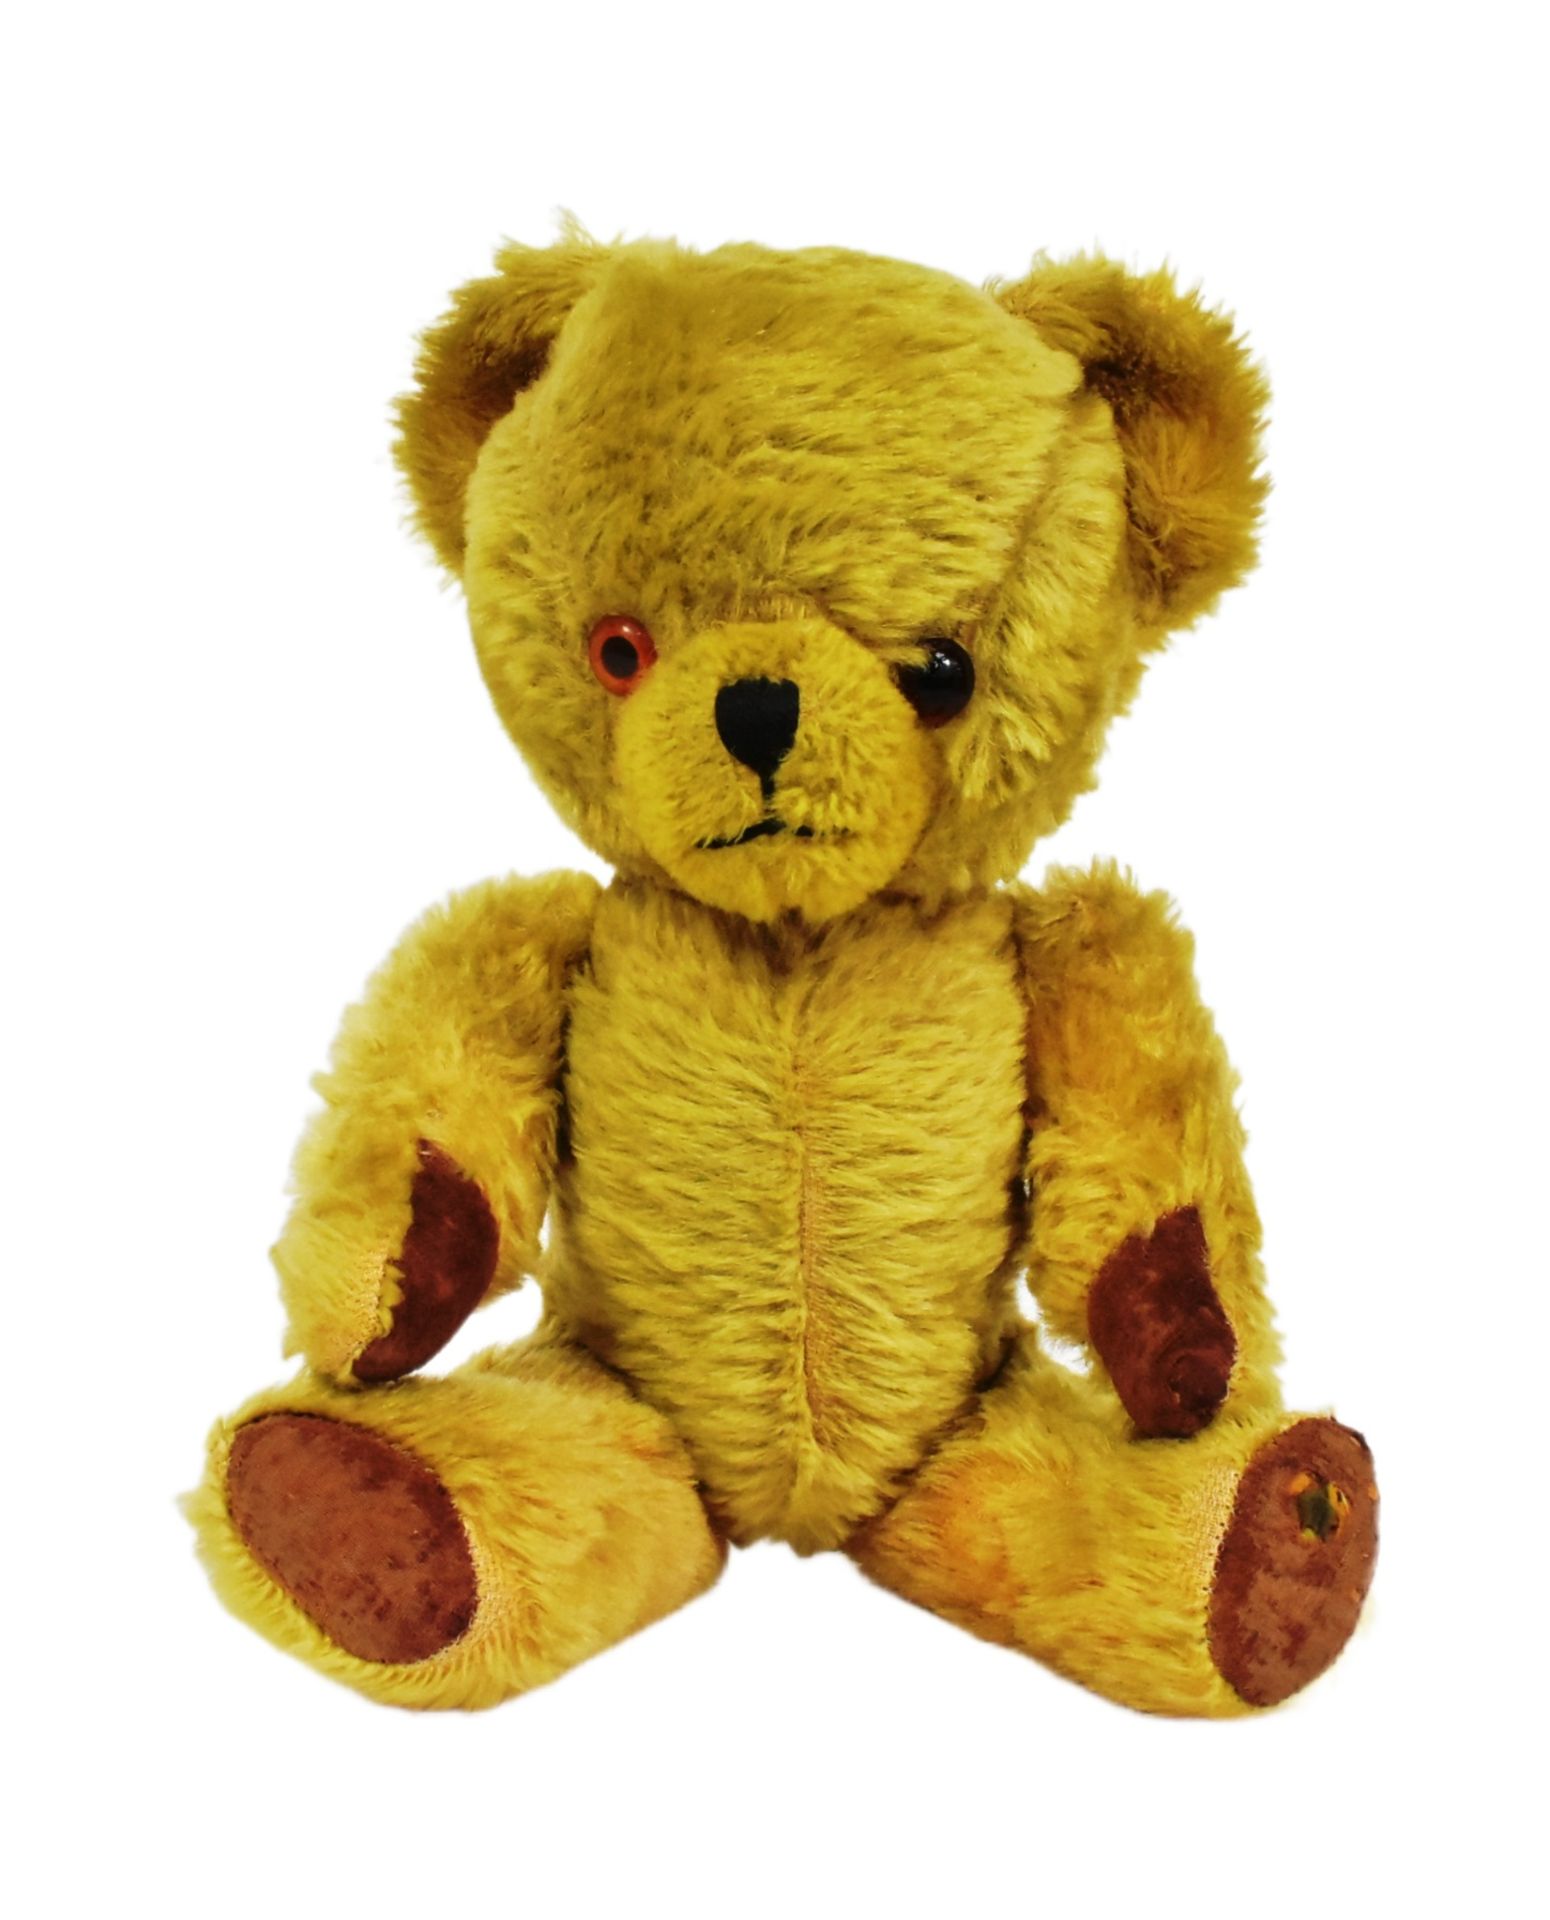 TEDDY BEARS - VINTAGE MERRYTHOUGHT CHEEKY BEAR